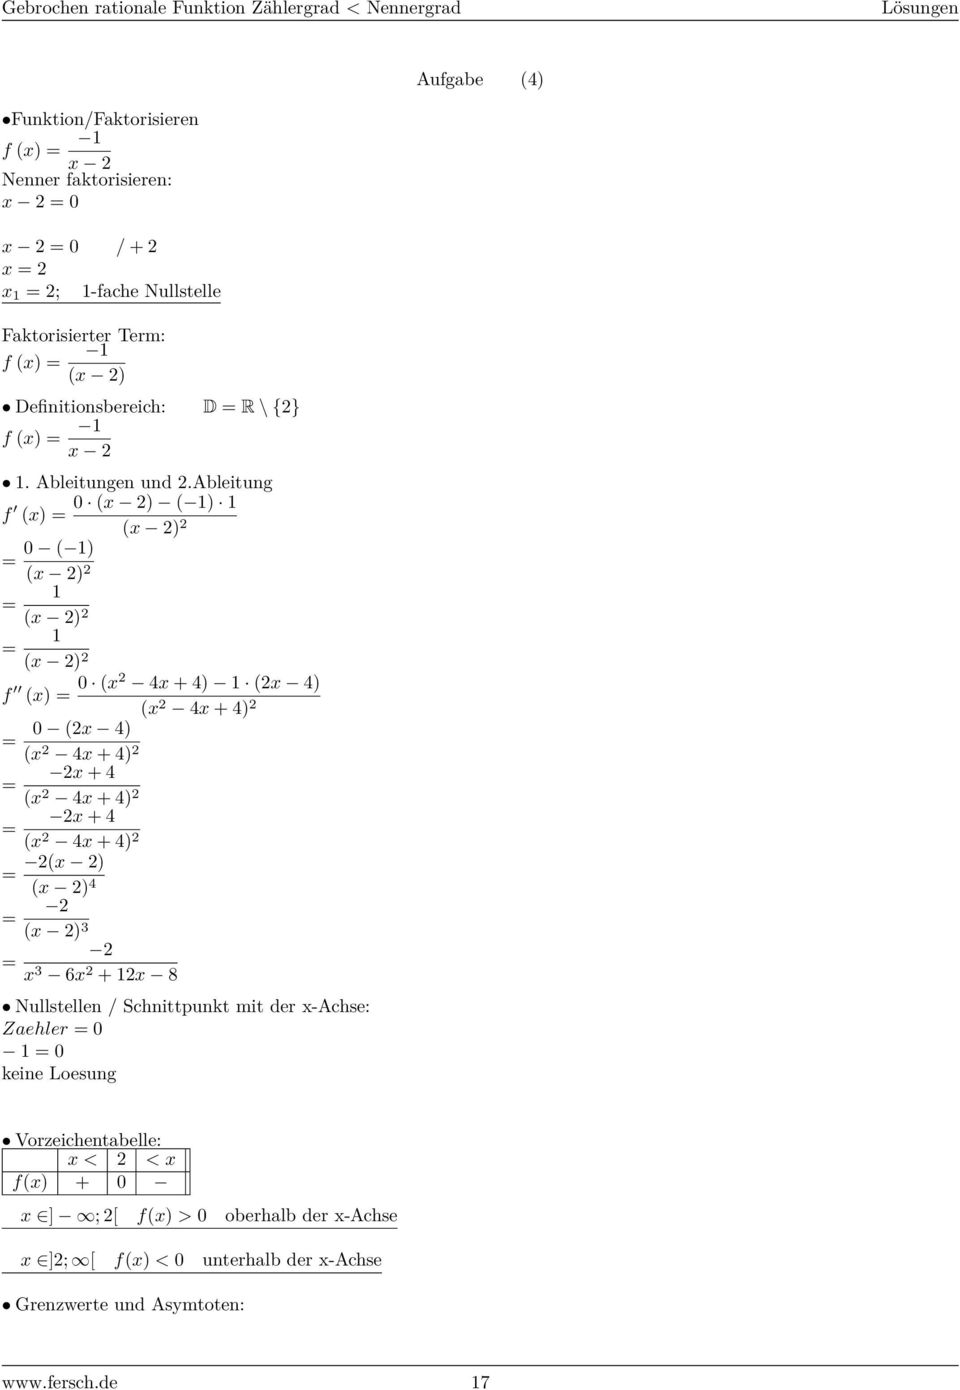 ableitung f 0 (x ) ( ) (x) = (x ) = 0 ( ) (x ) = (x ) = (x ) f (x) = 0 (x x + ) (x ) (x x + ) 0 (x ) = (x x + ) x + = (x x + ) x + = (x x + ) (x ) = (x ) = (x )